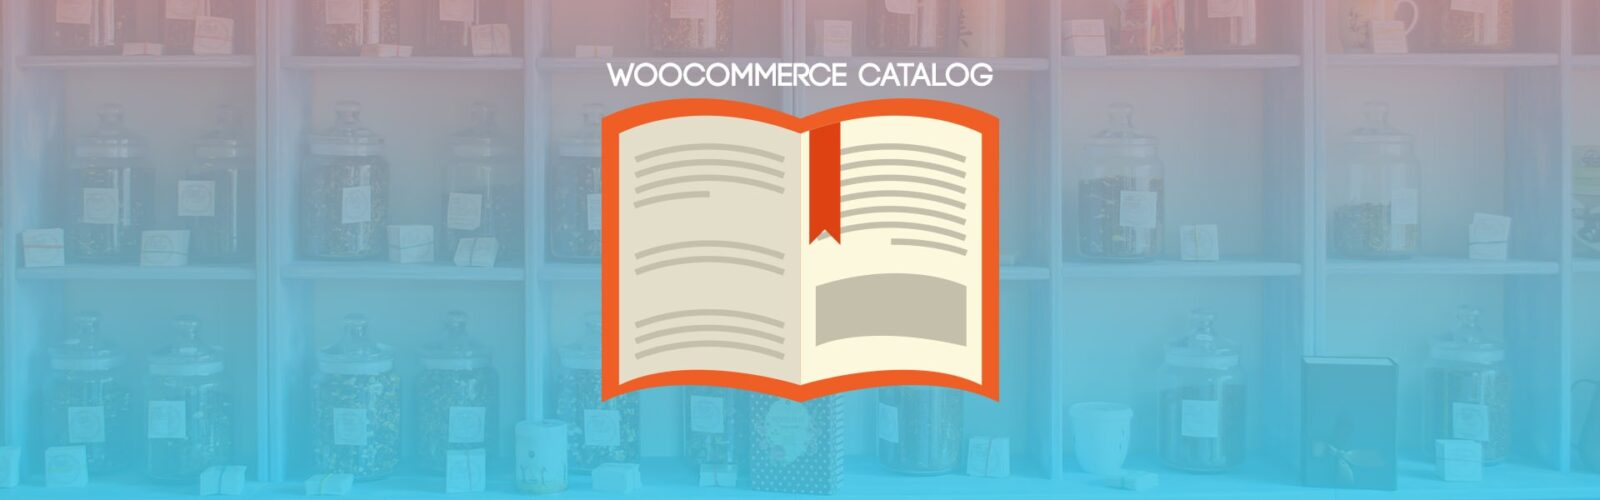 woocommerce-catalog